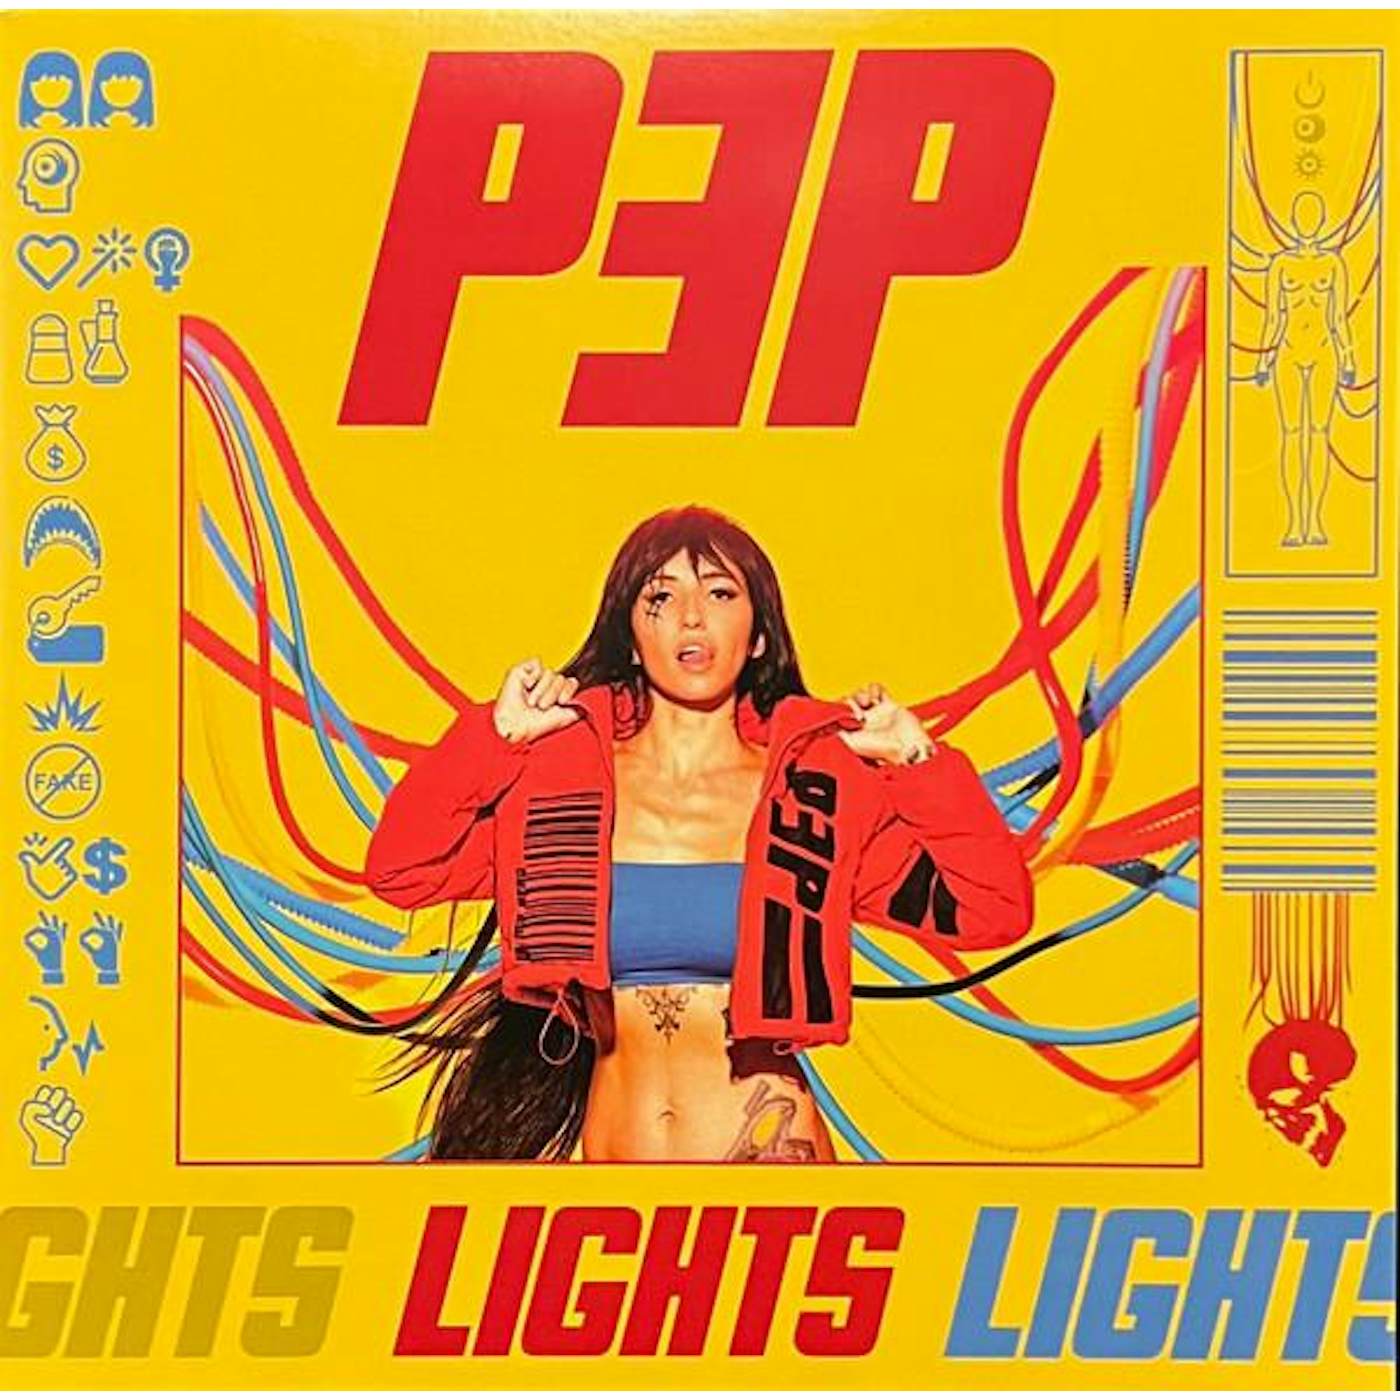 Lights PEP (X) (Canary Yellow) Vinyl Record